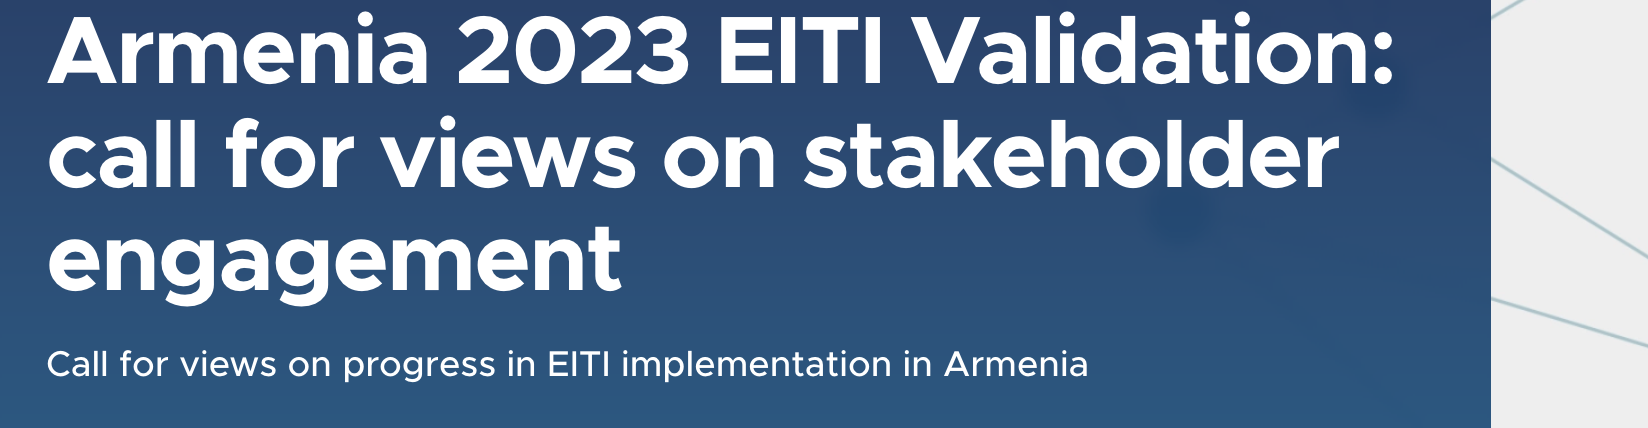 Armenia 2023 EITI Validation: call for views on stakeholder engagement